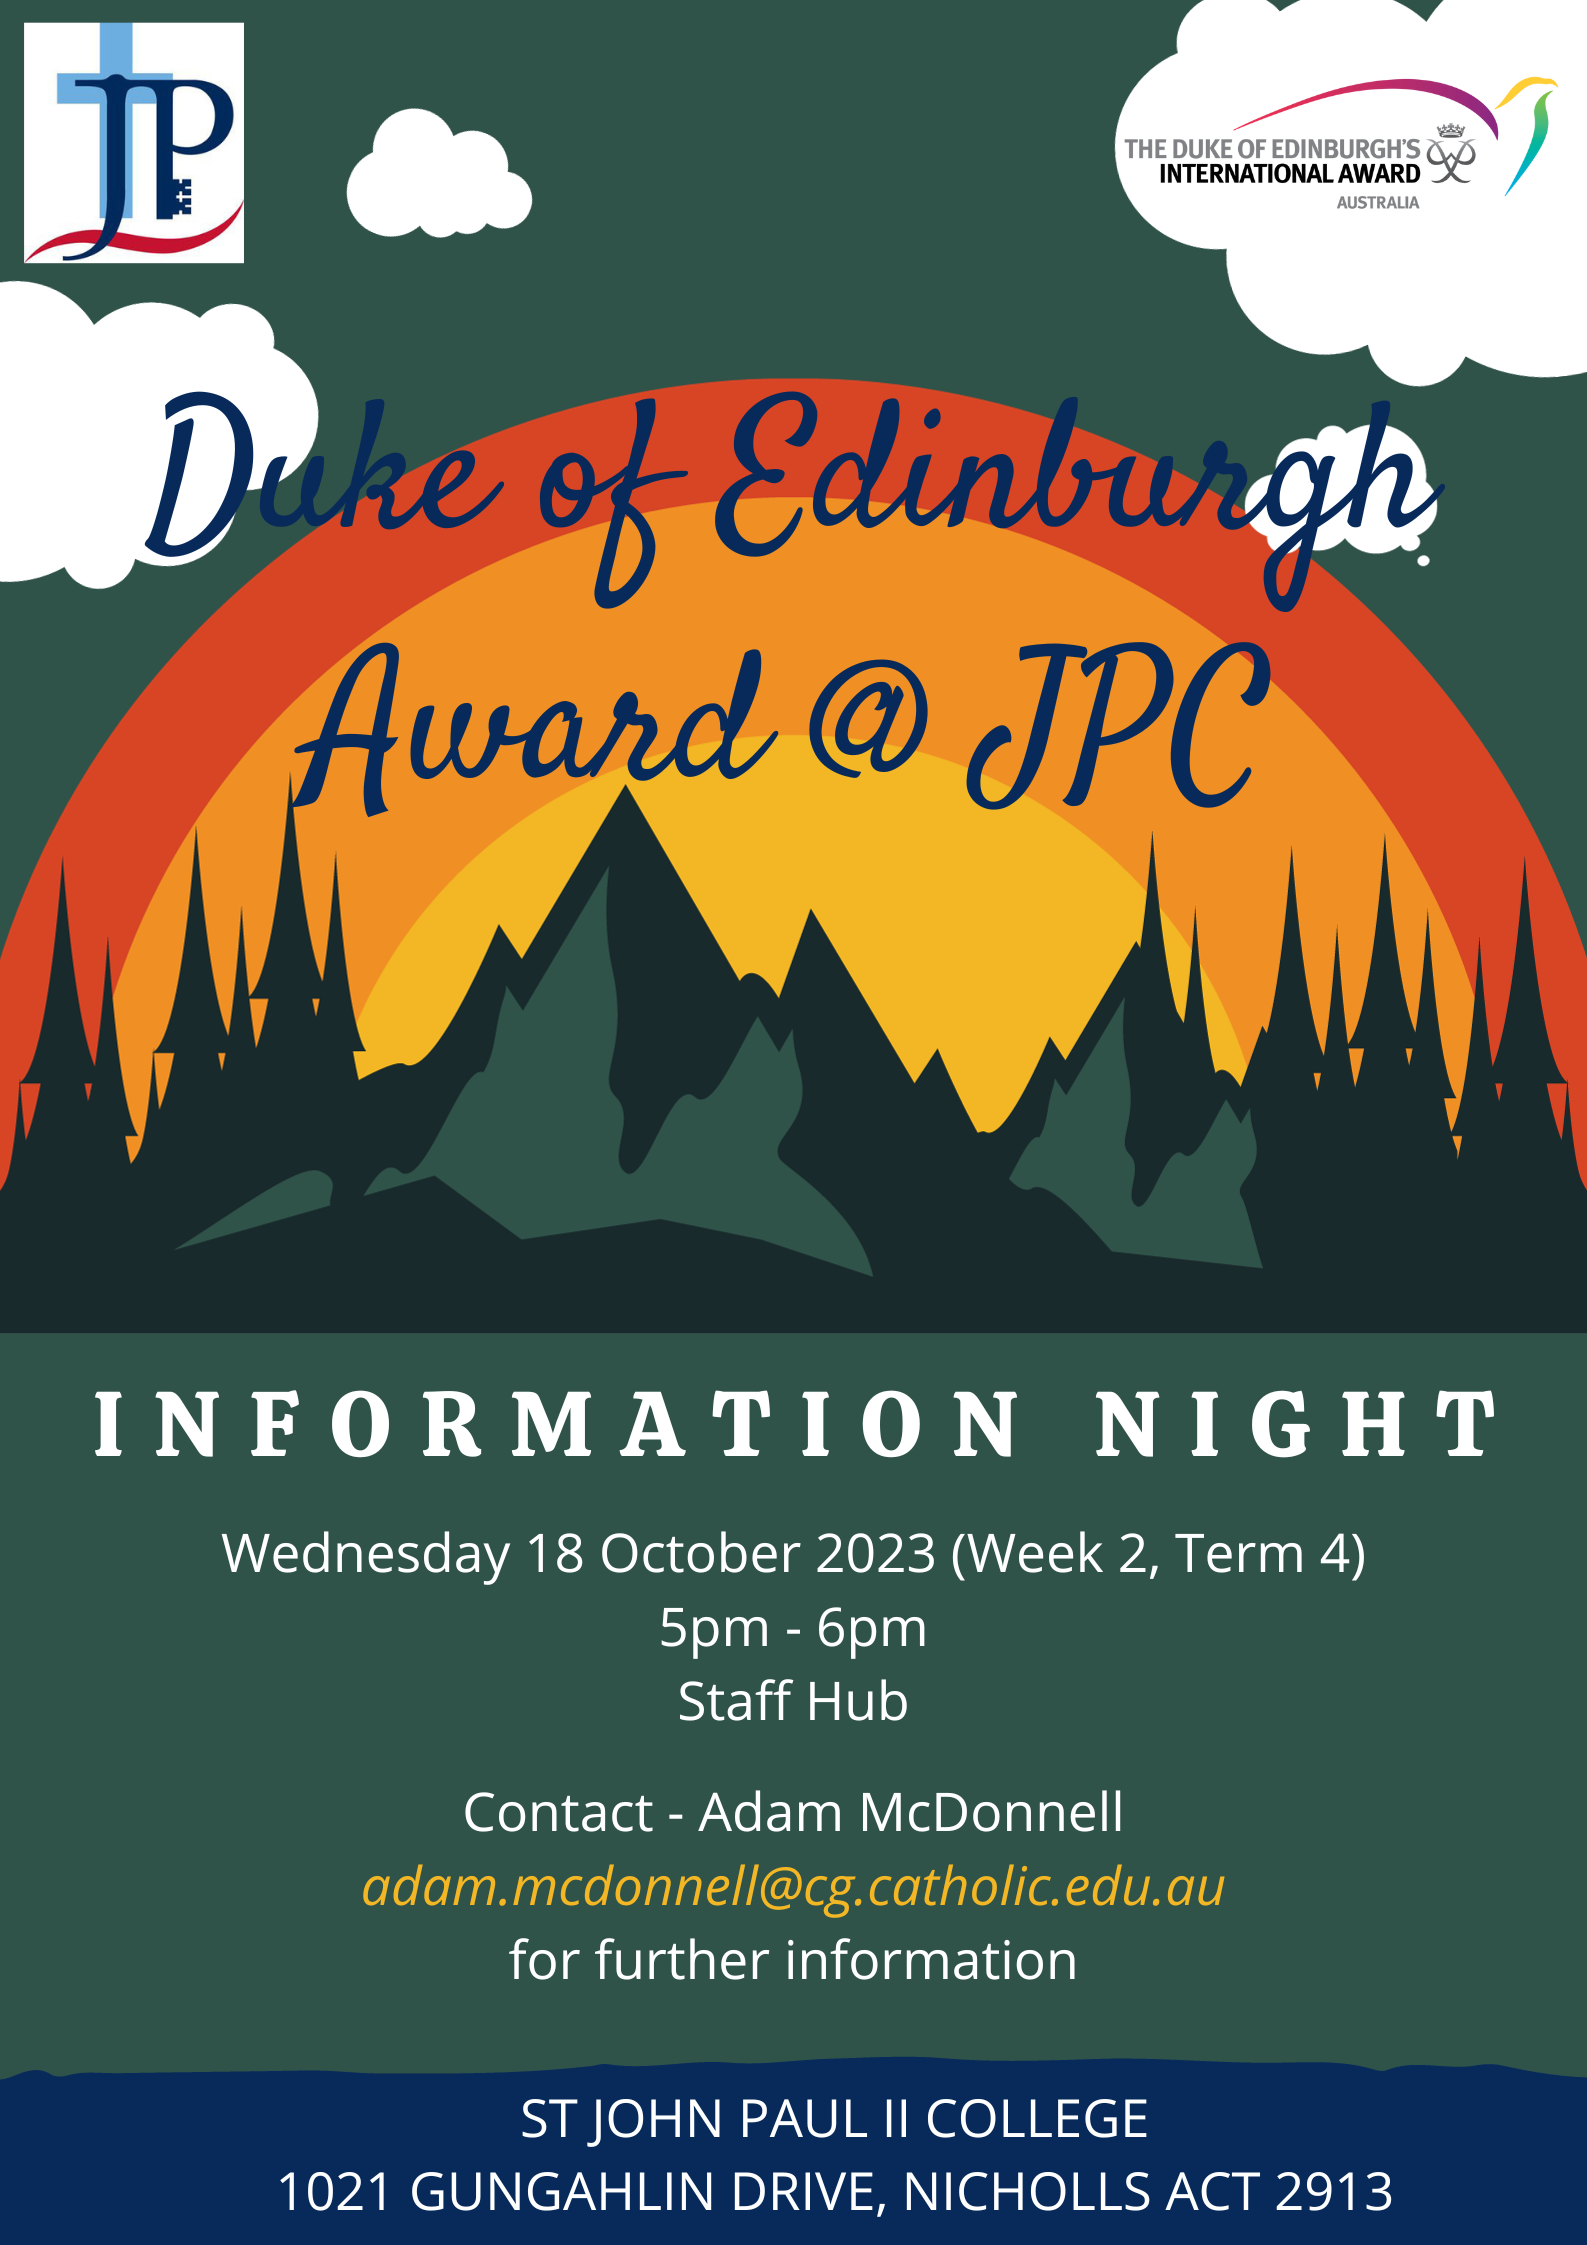 Duke of Edinburgh Information Night featured image